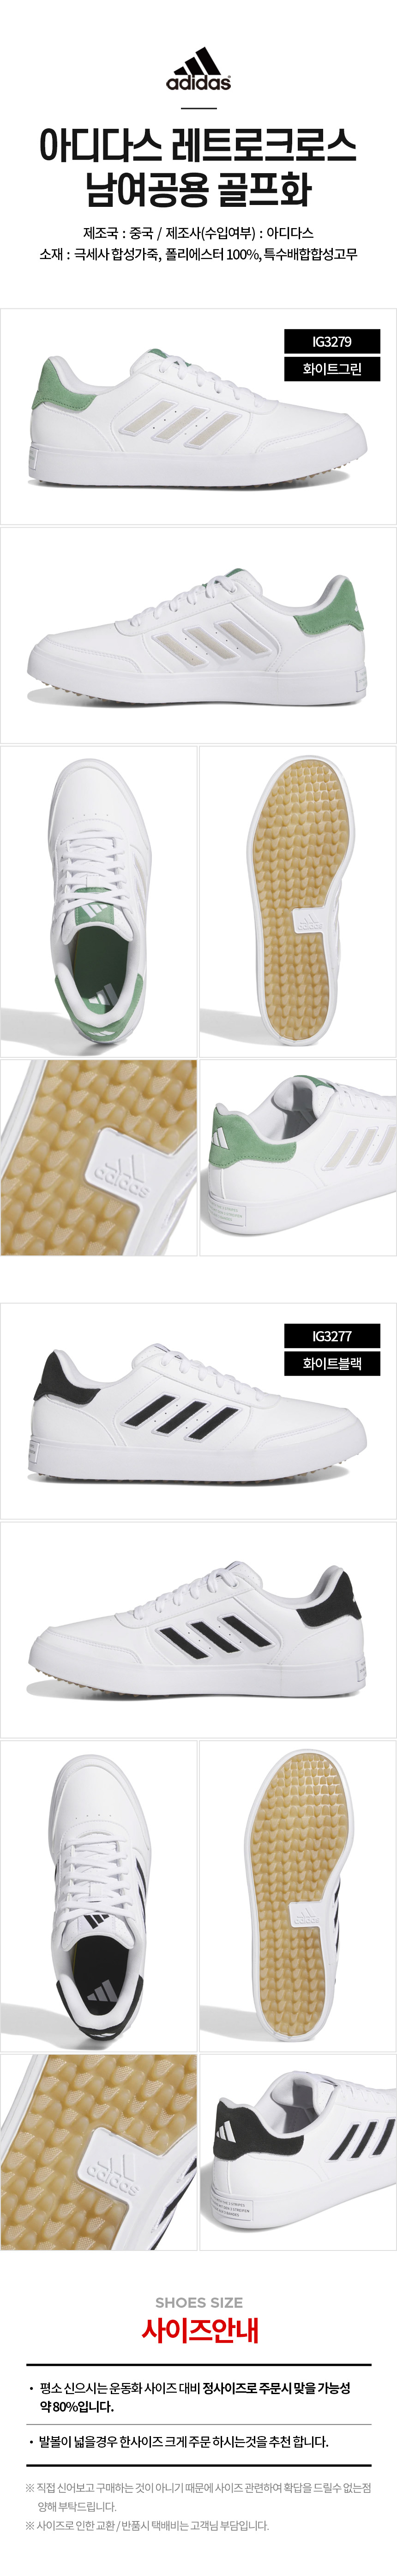 adidas_retro_cross_golf_shoes_24.jpg